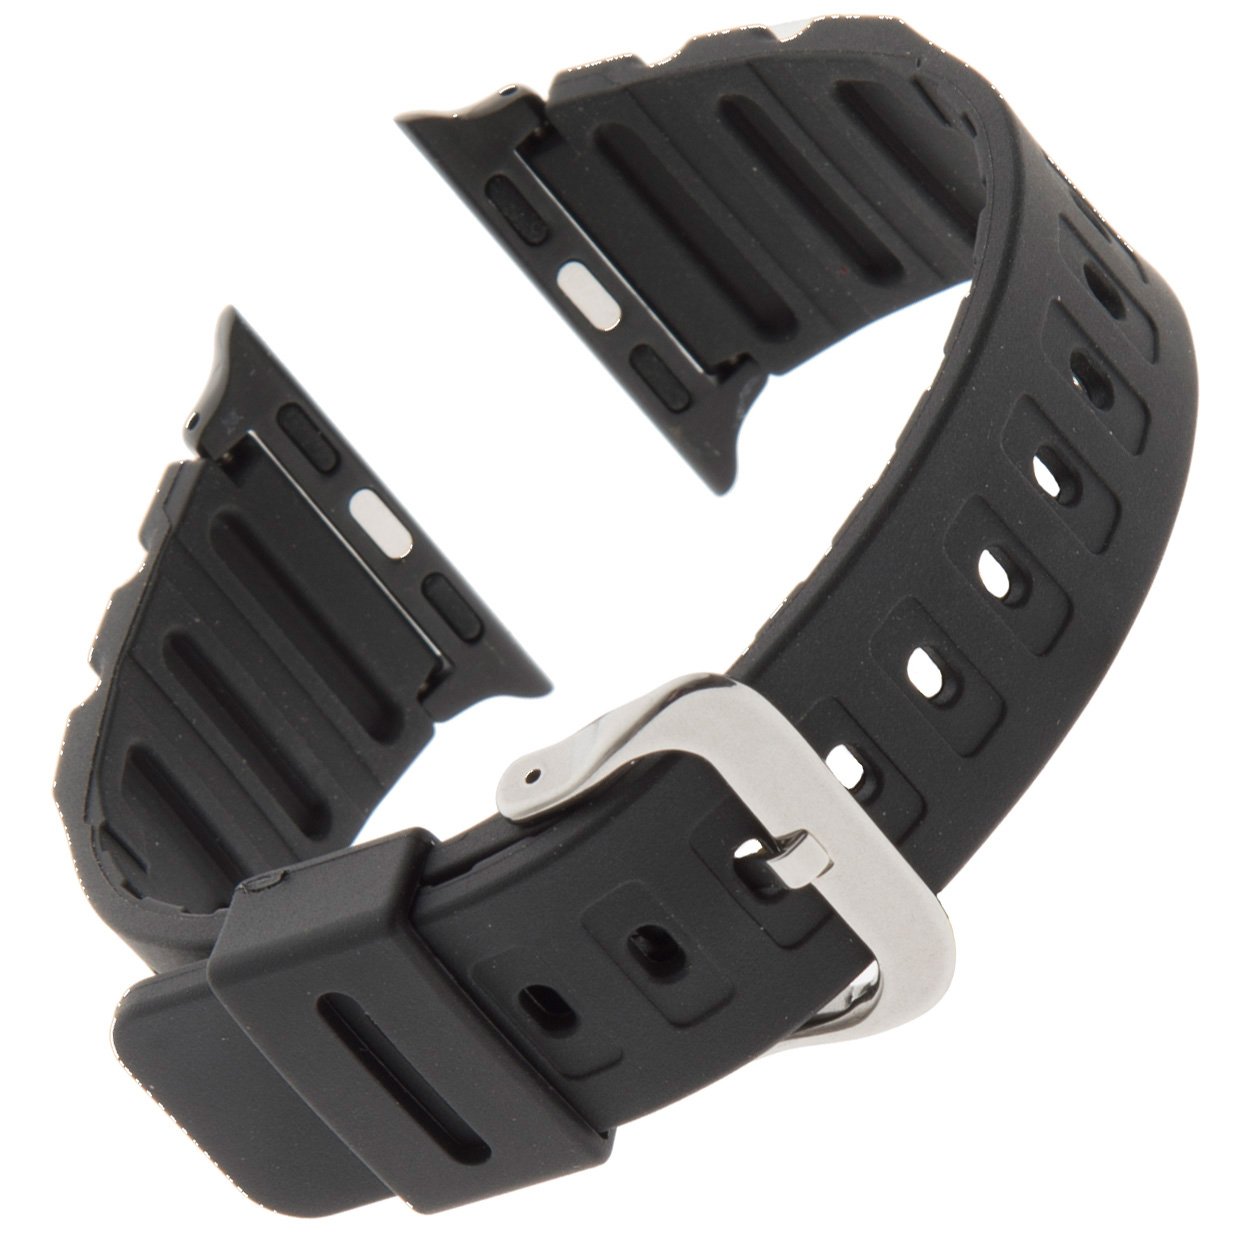 Gilden Extra-Long Black Waterproof Polyurethane Smart Watch Band 017270-SMART, fits Apple Apple Watch